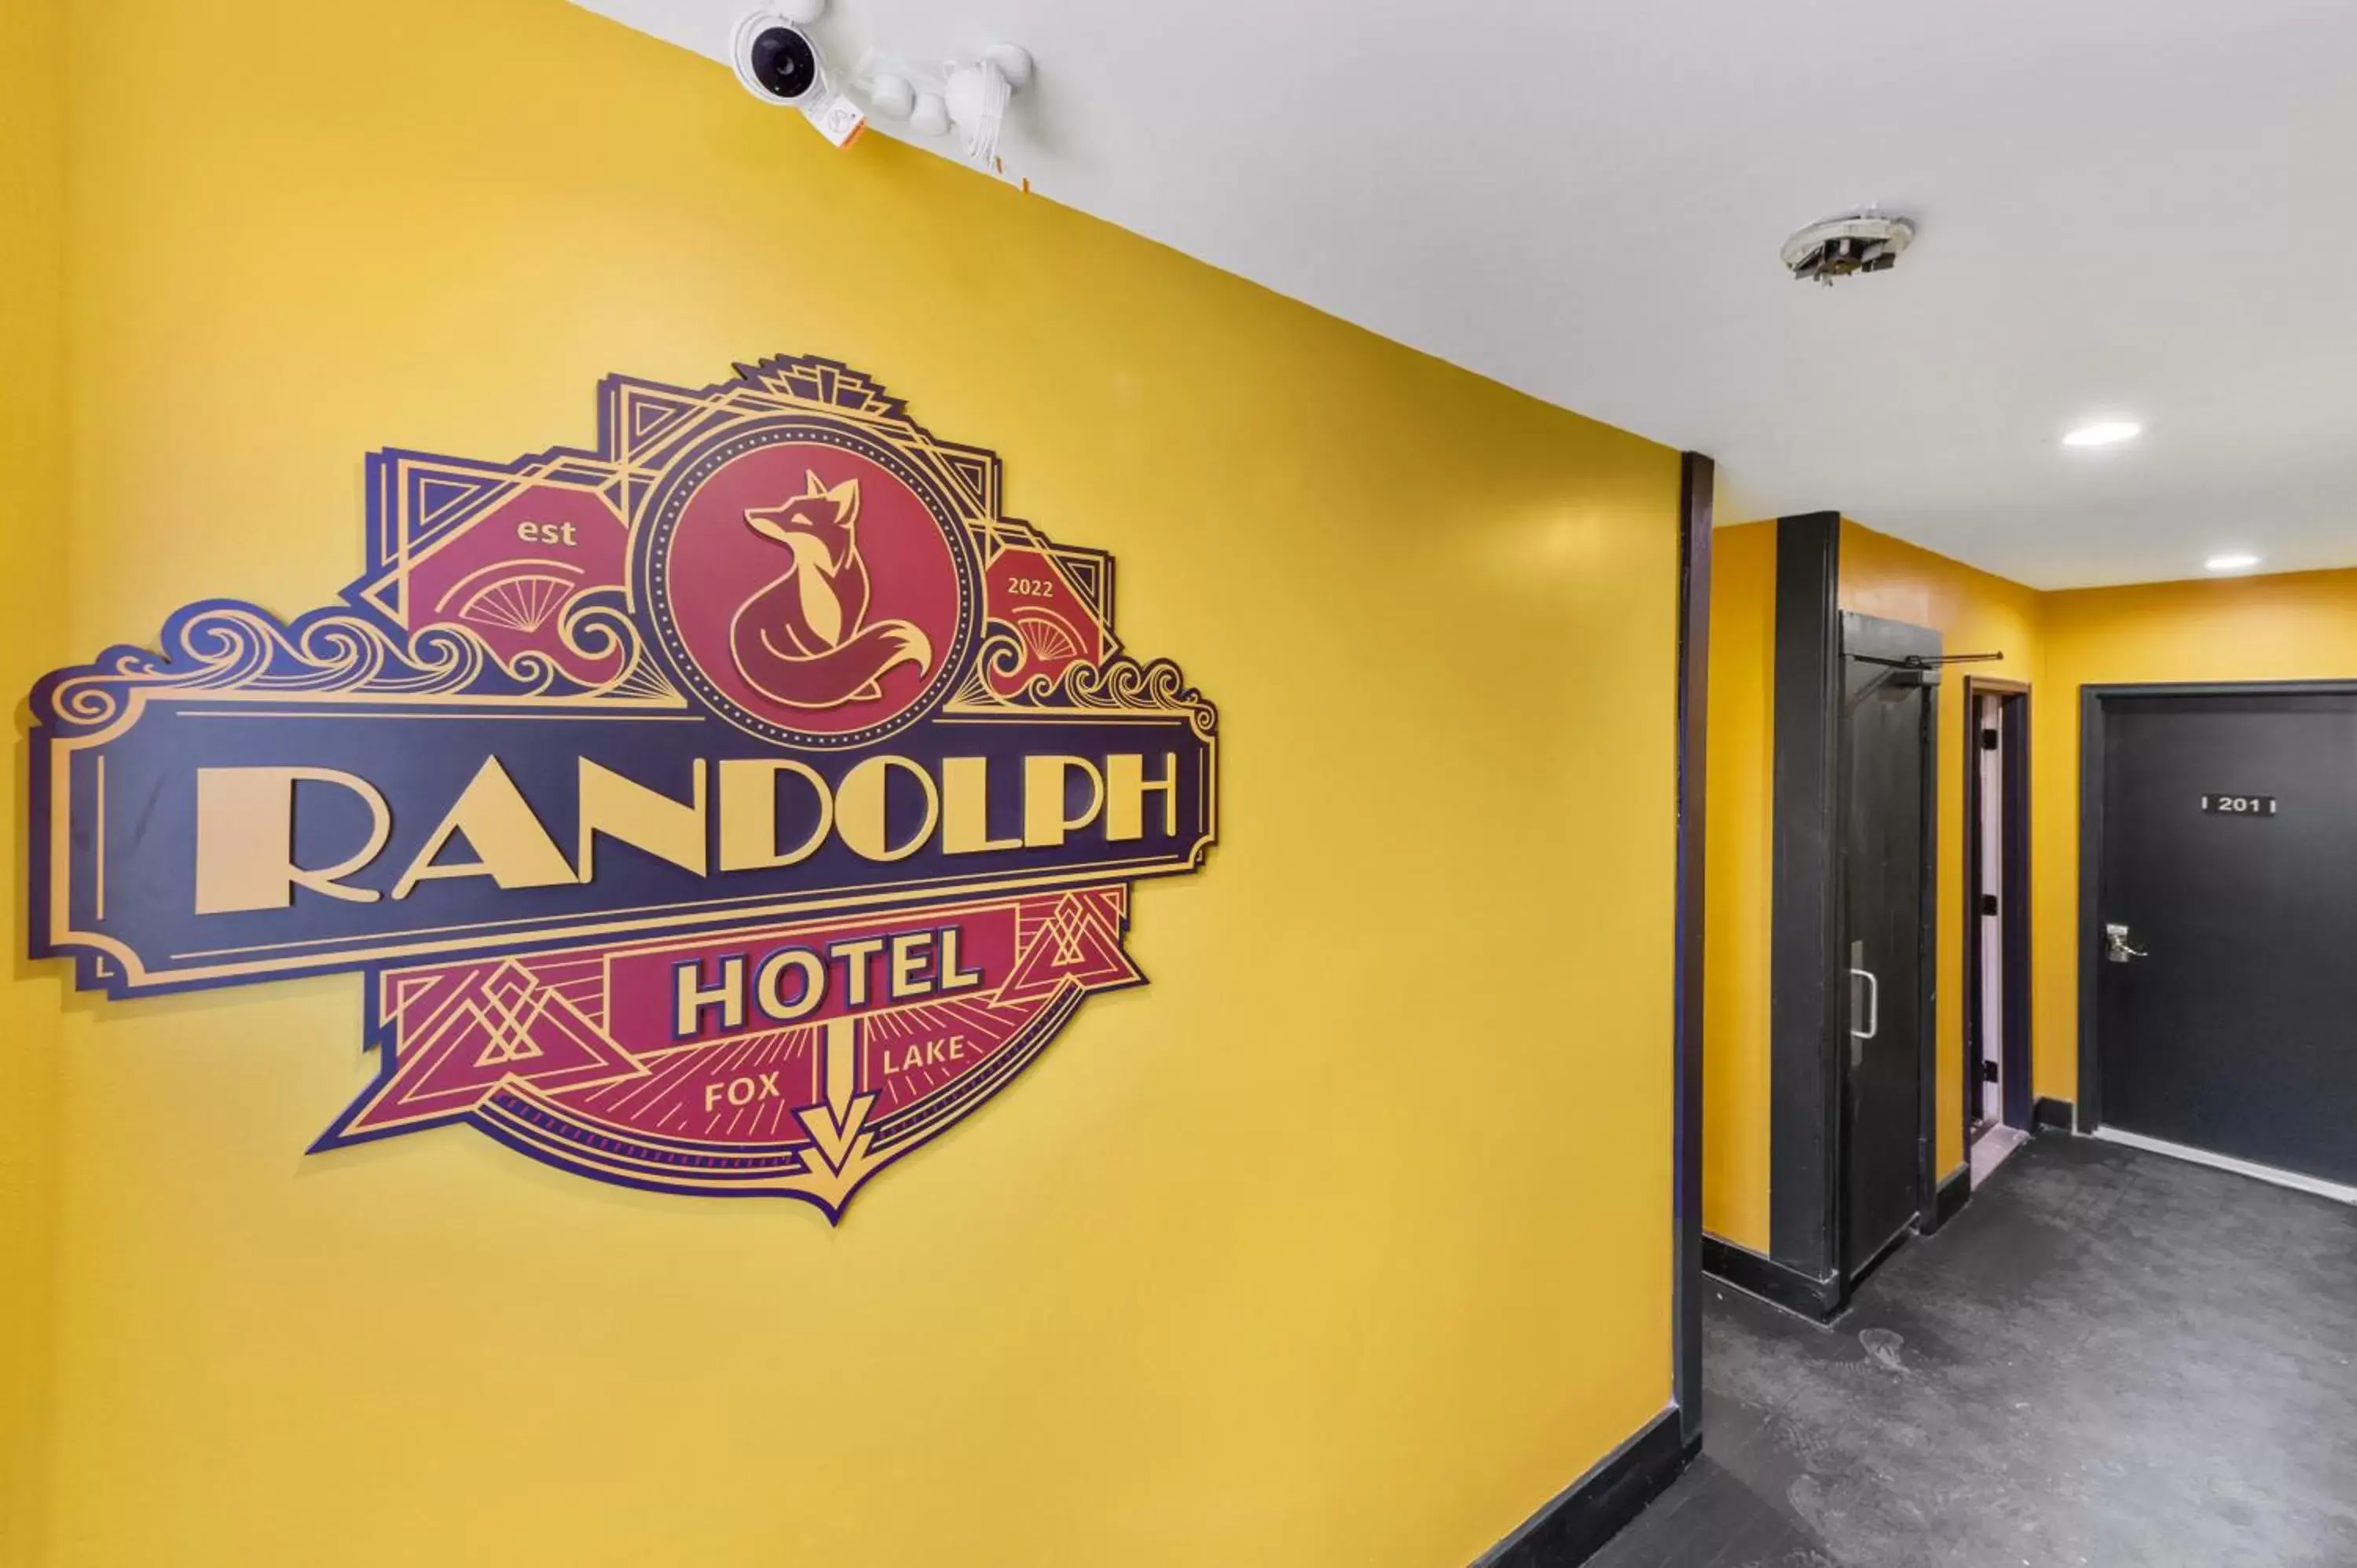 Randolph Hotel